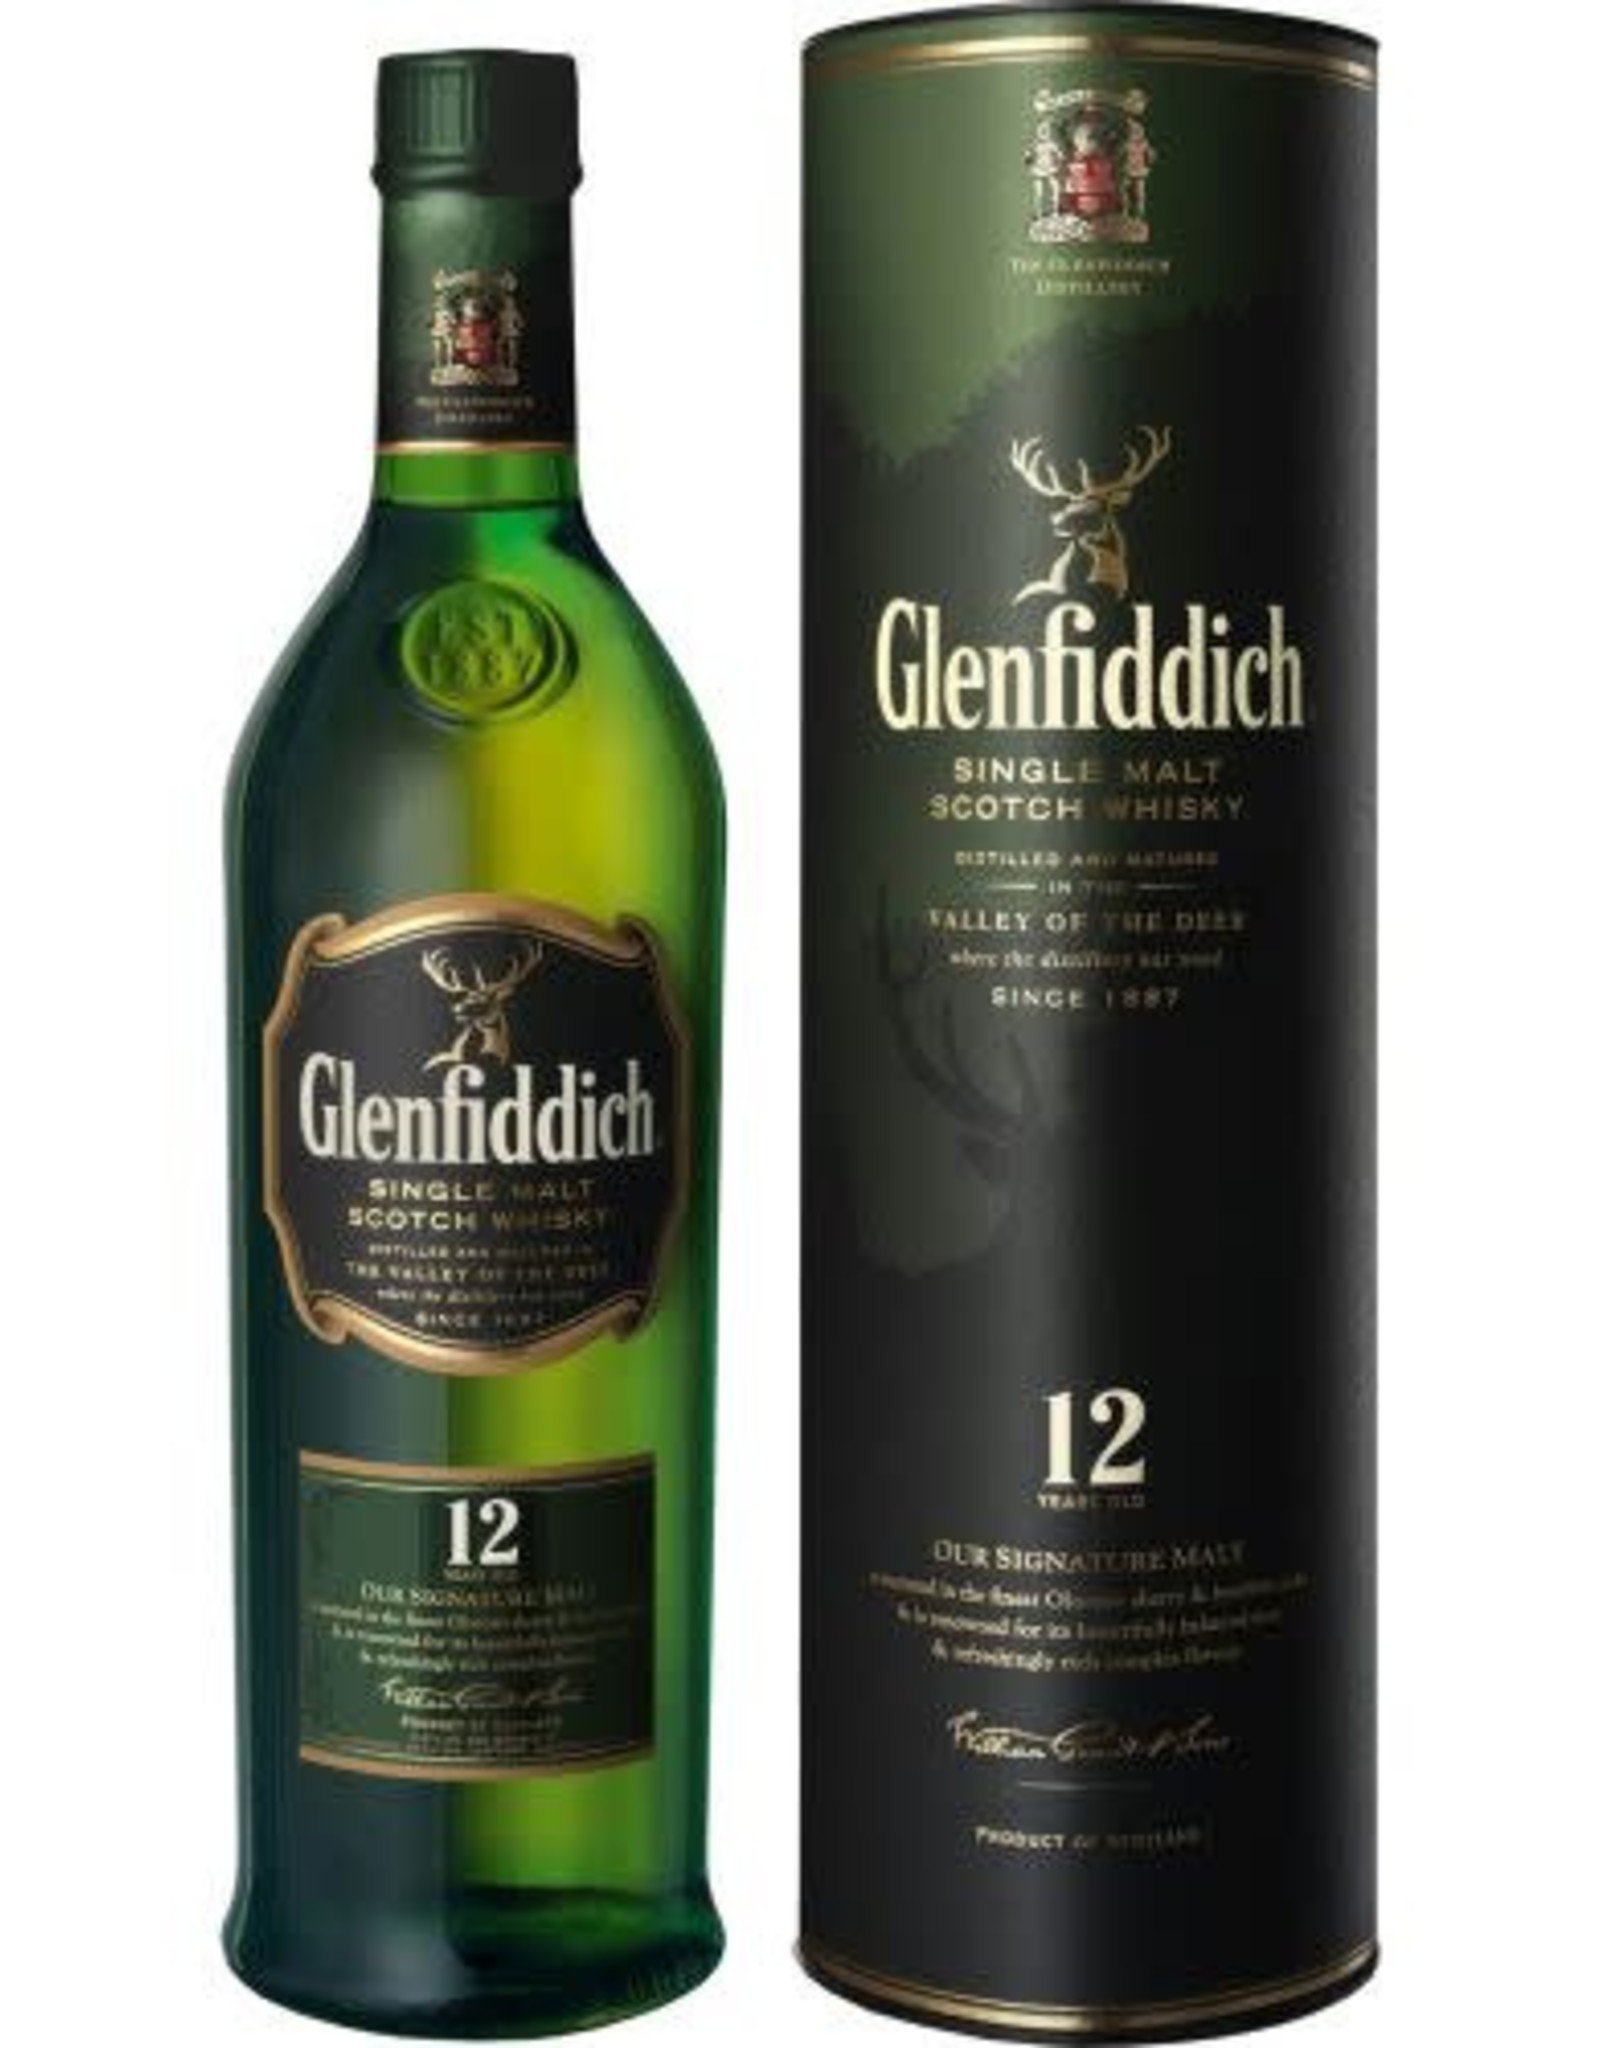 Гленфиддик 18. Виски шотландский односолодовый Гленфиддик 12. Гленфиддич 12 Special Reserve Single Malt. Виски Glenfiddich 15 years old. Glenfiddich 15 Single Malt Scotch Whisky.